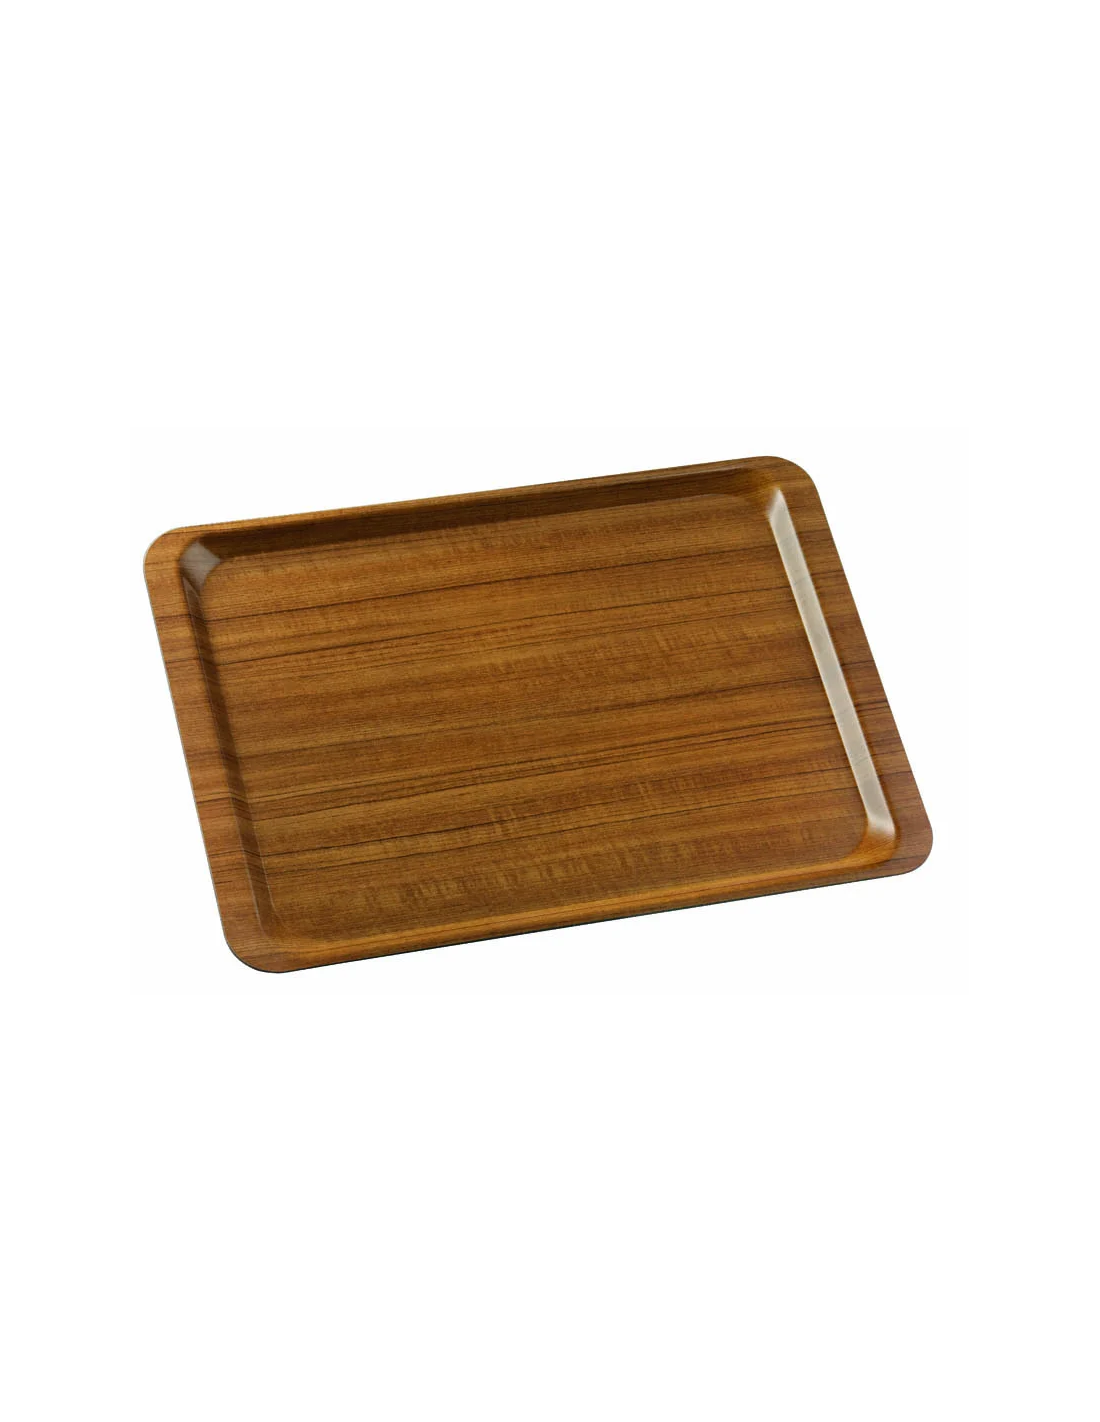 Bandeja rectangular de madera y melamina 43 x 29 cm para servir